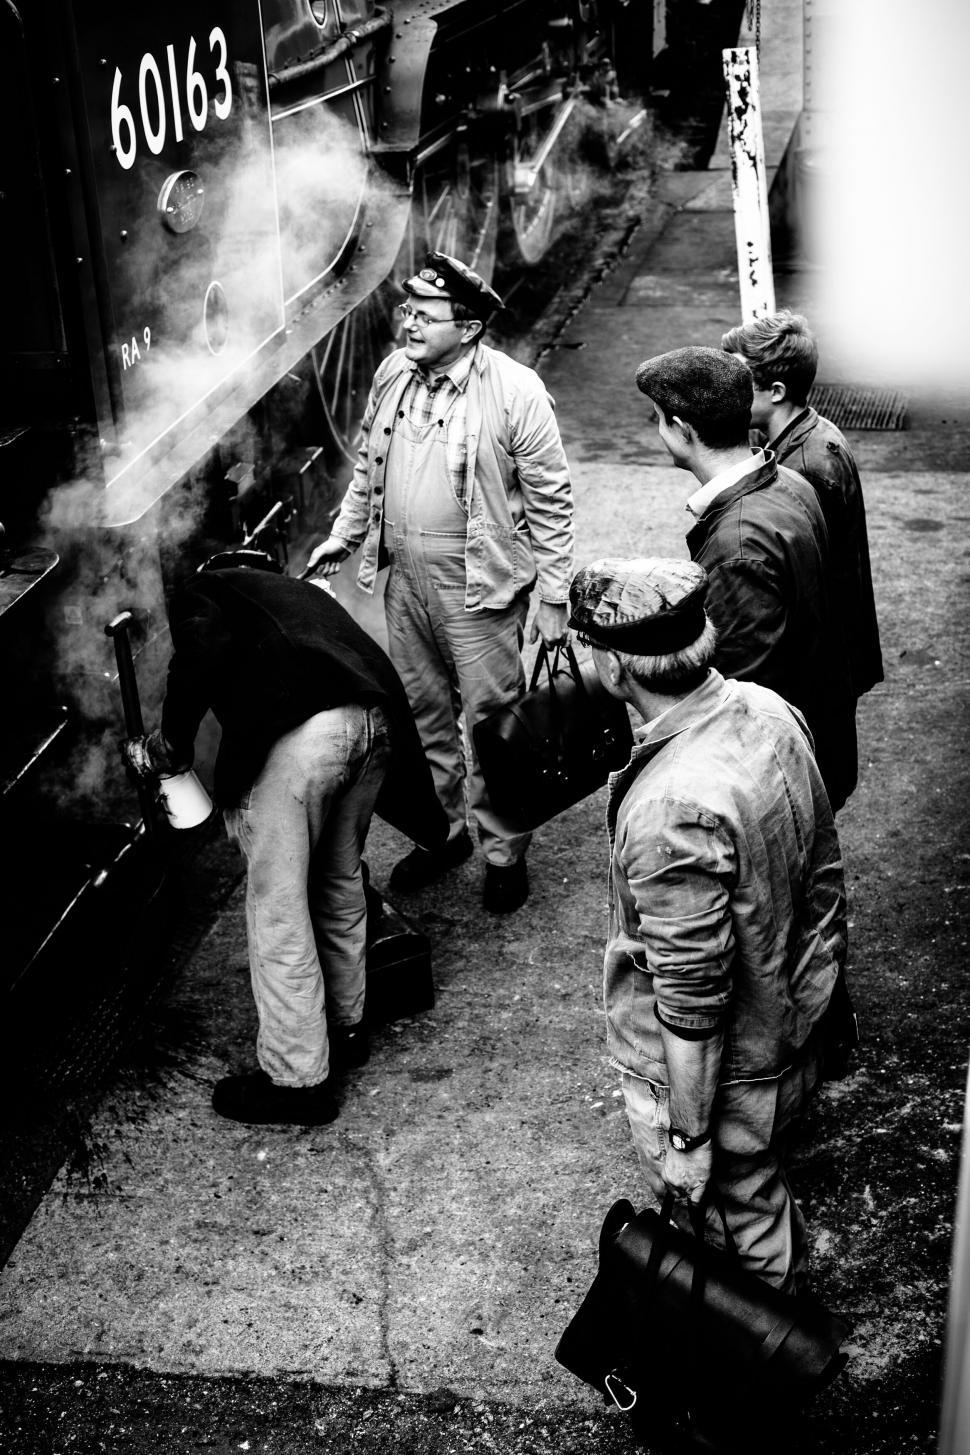 Free Image of Train station crew working on locomotive 